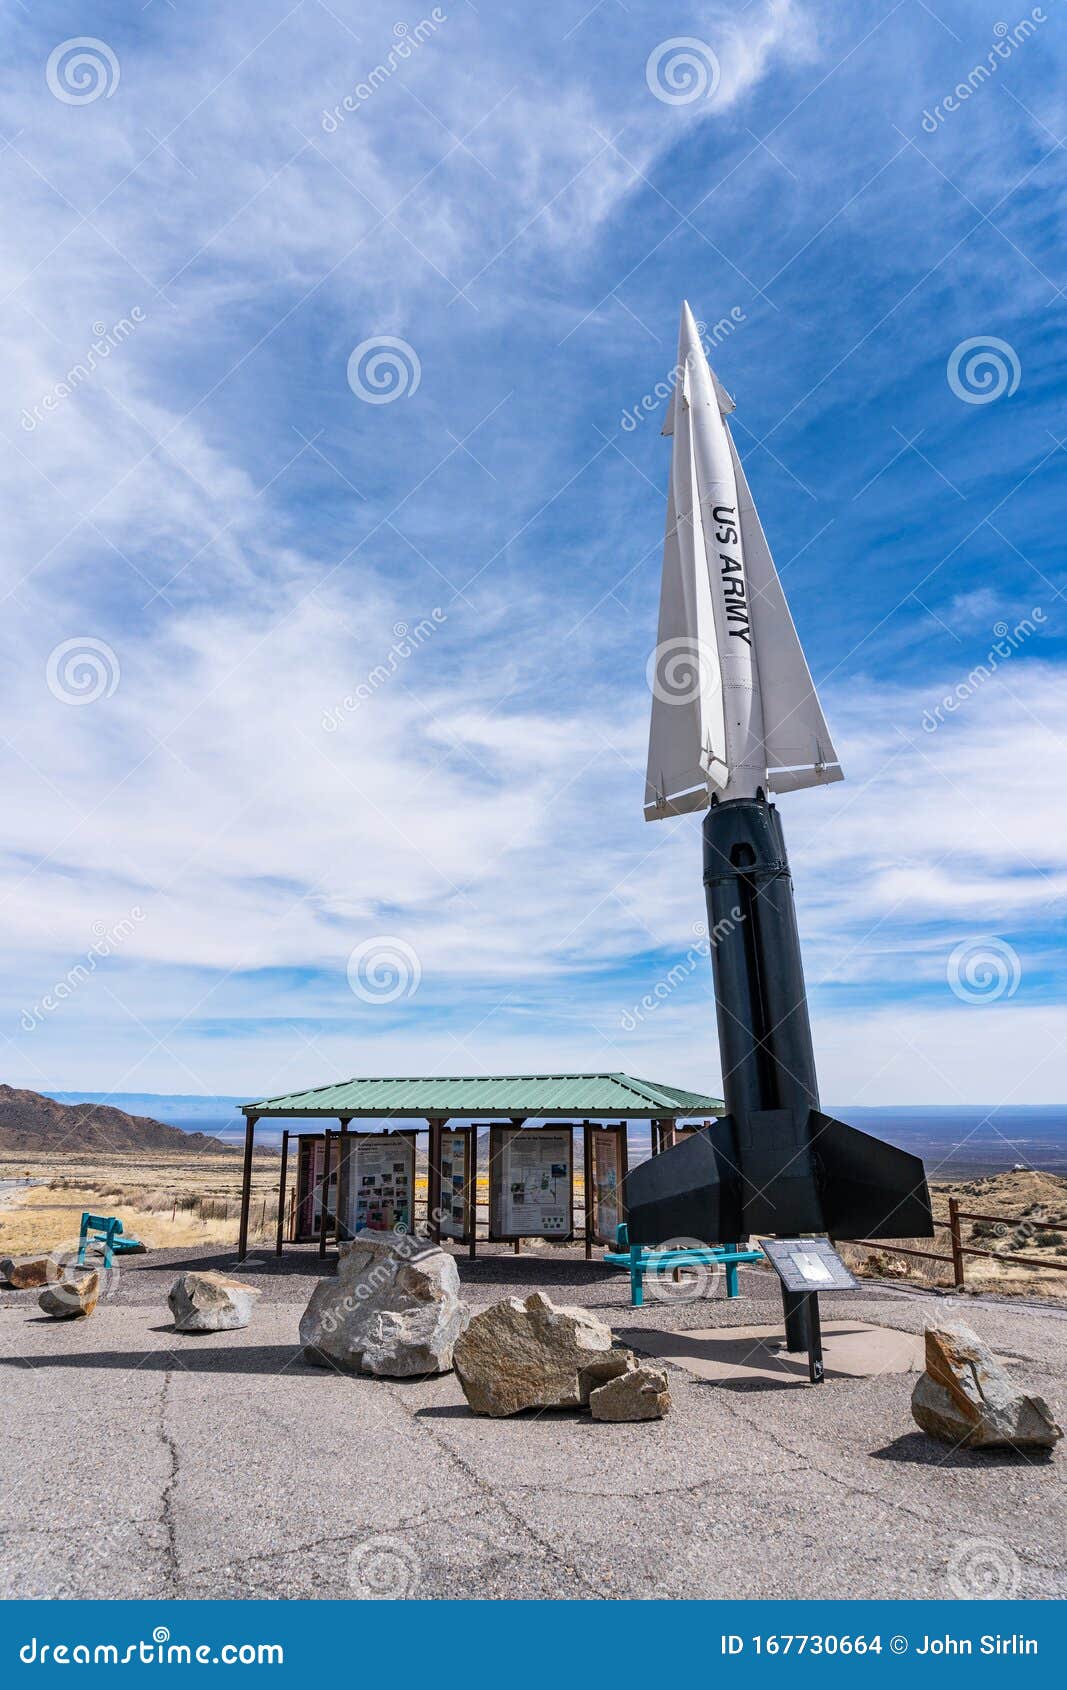 New Mexico Missile Range